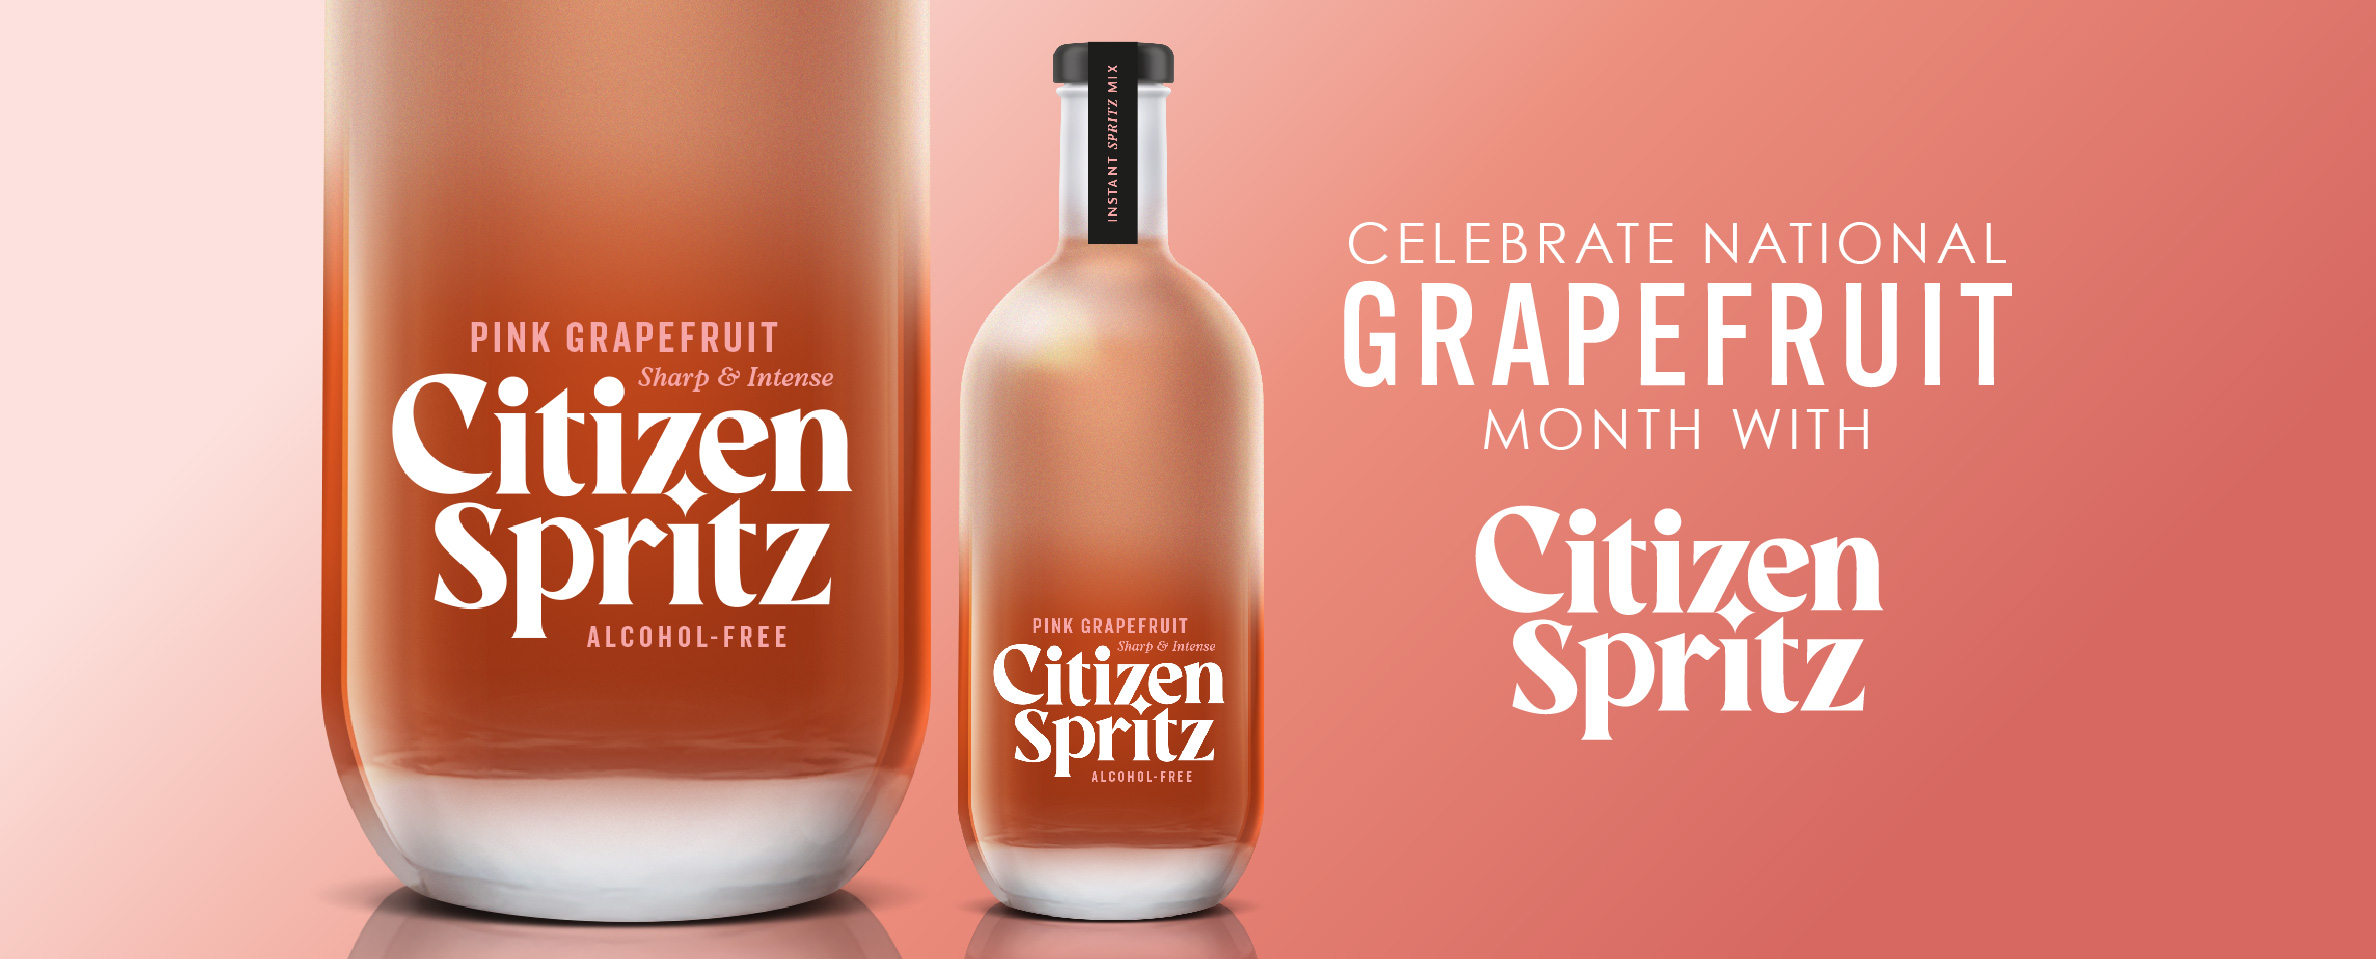 celebrate national grapefruit month with citizen spritz